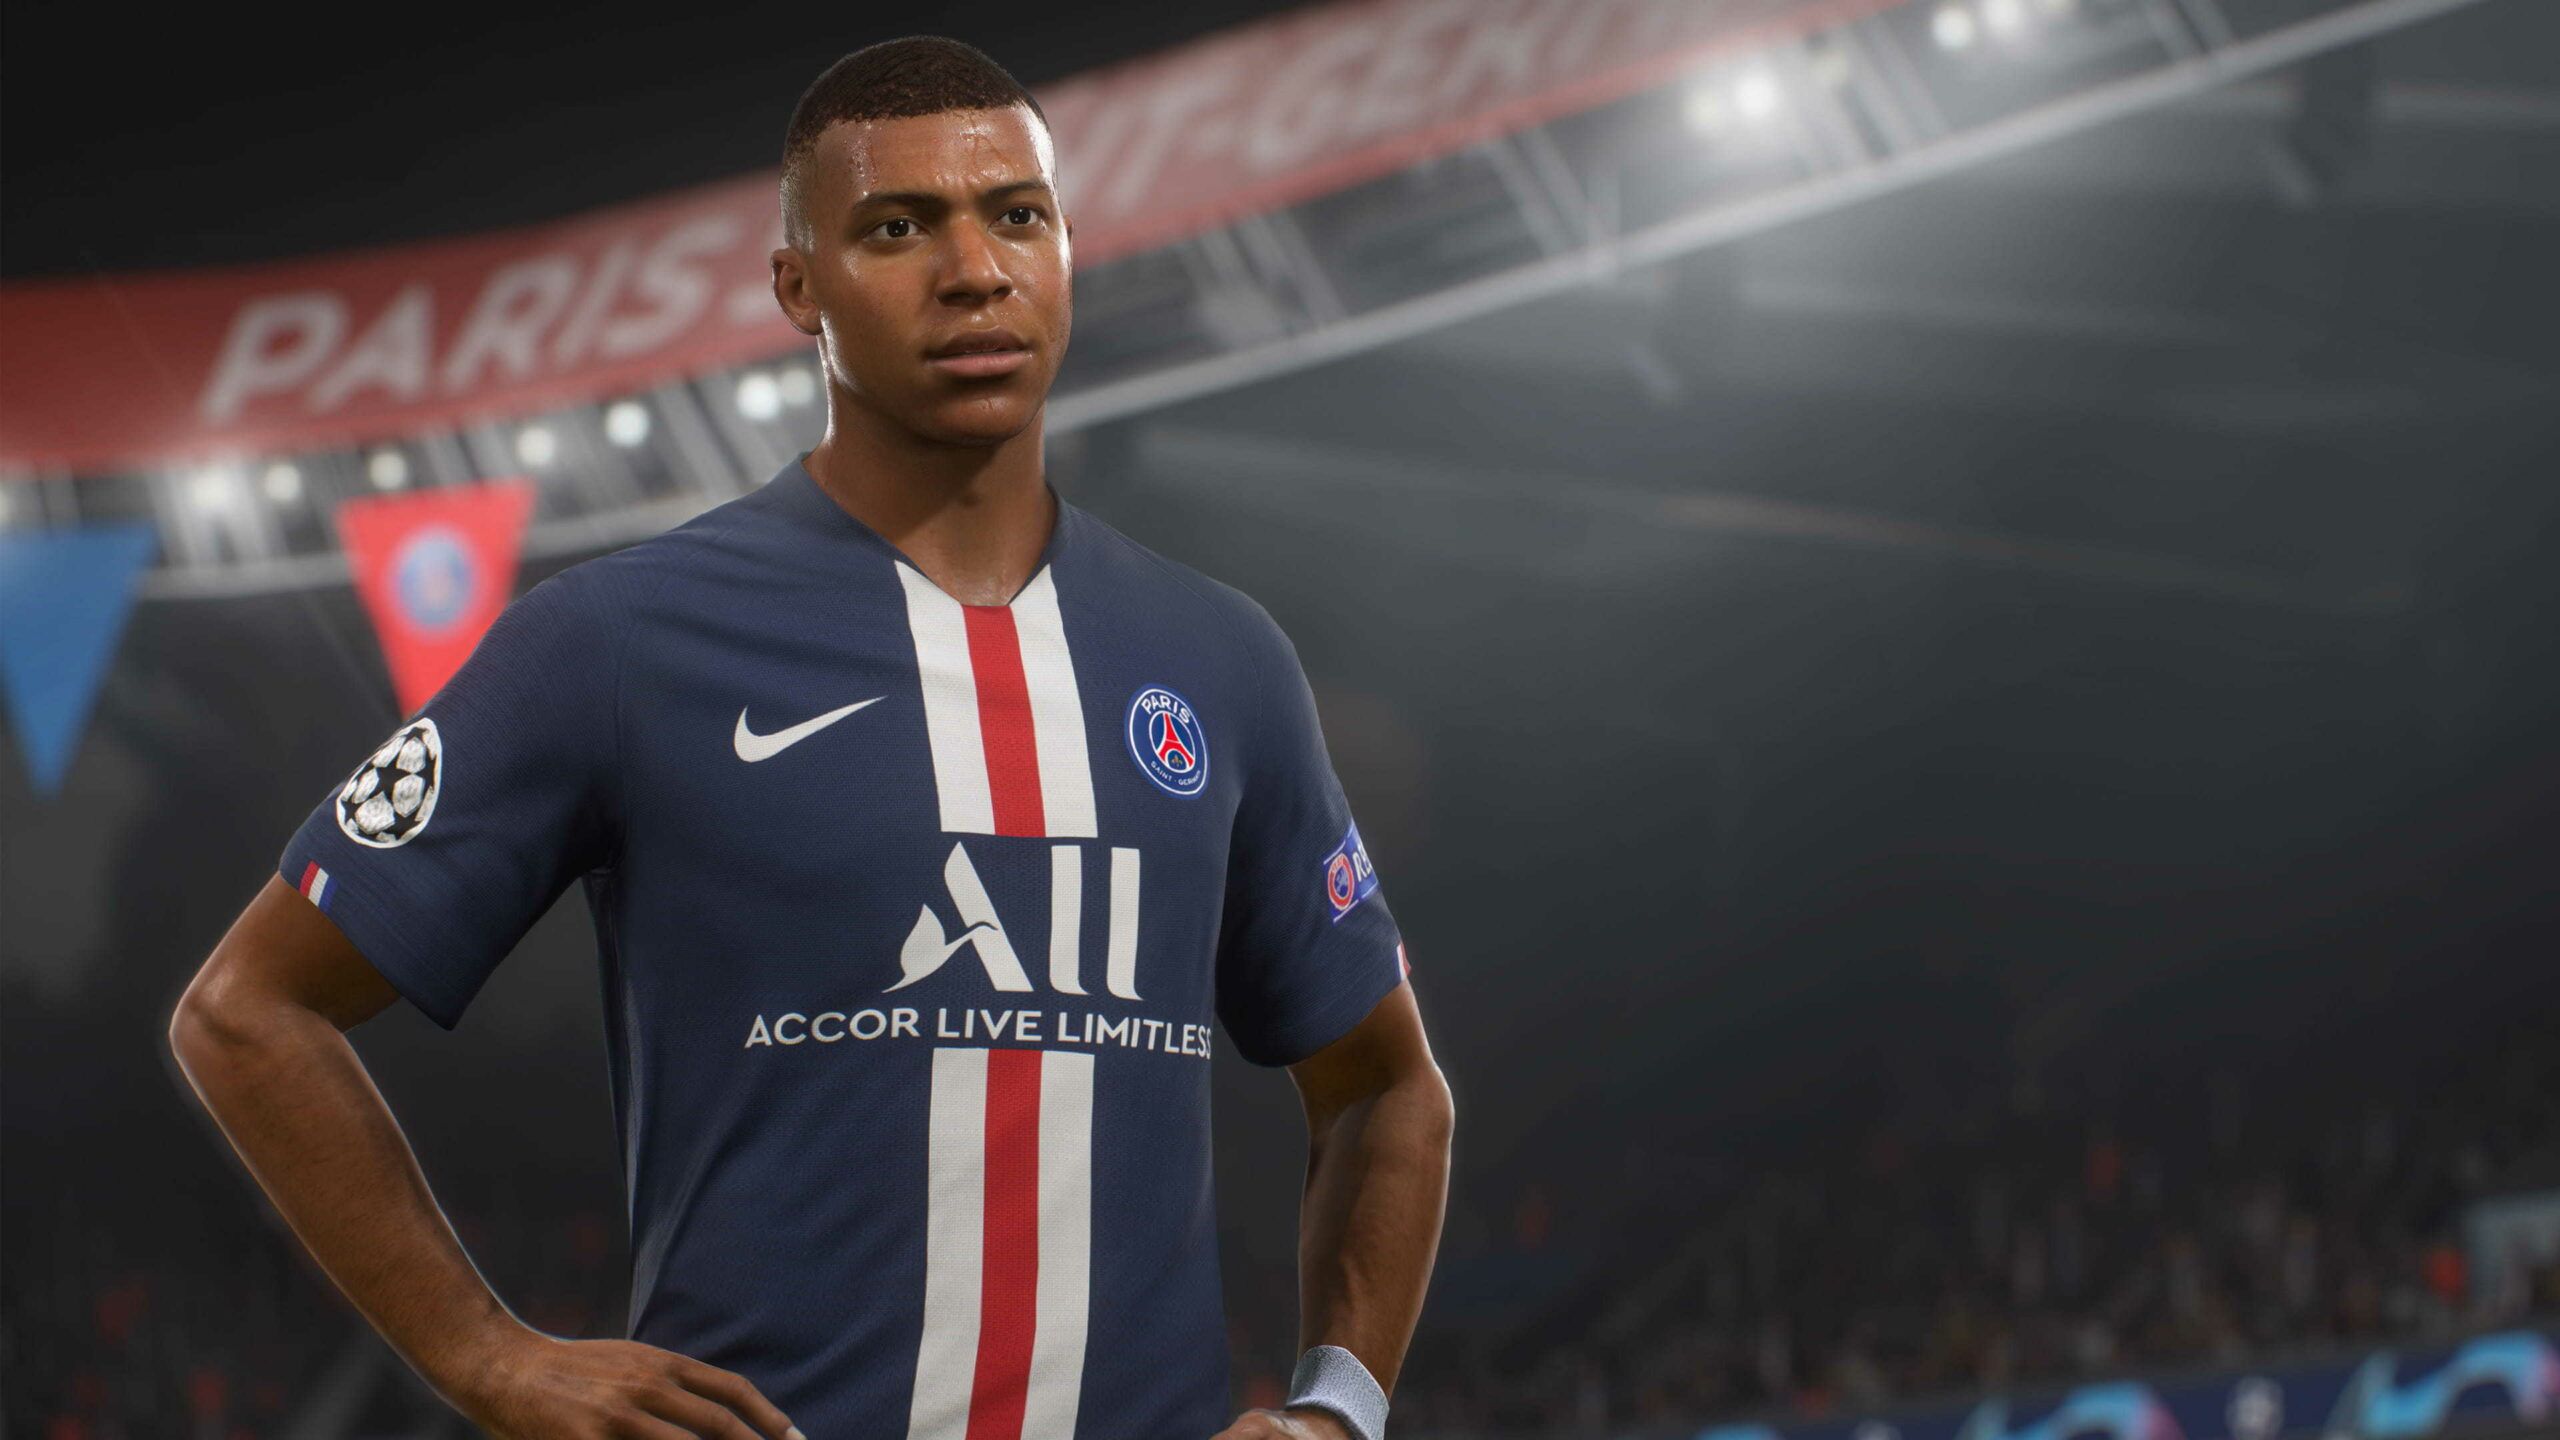 FIFA 21 Will Not Support Cross Platform, Cross Gen Play, EA Confirms